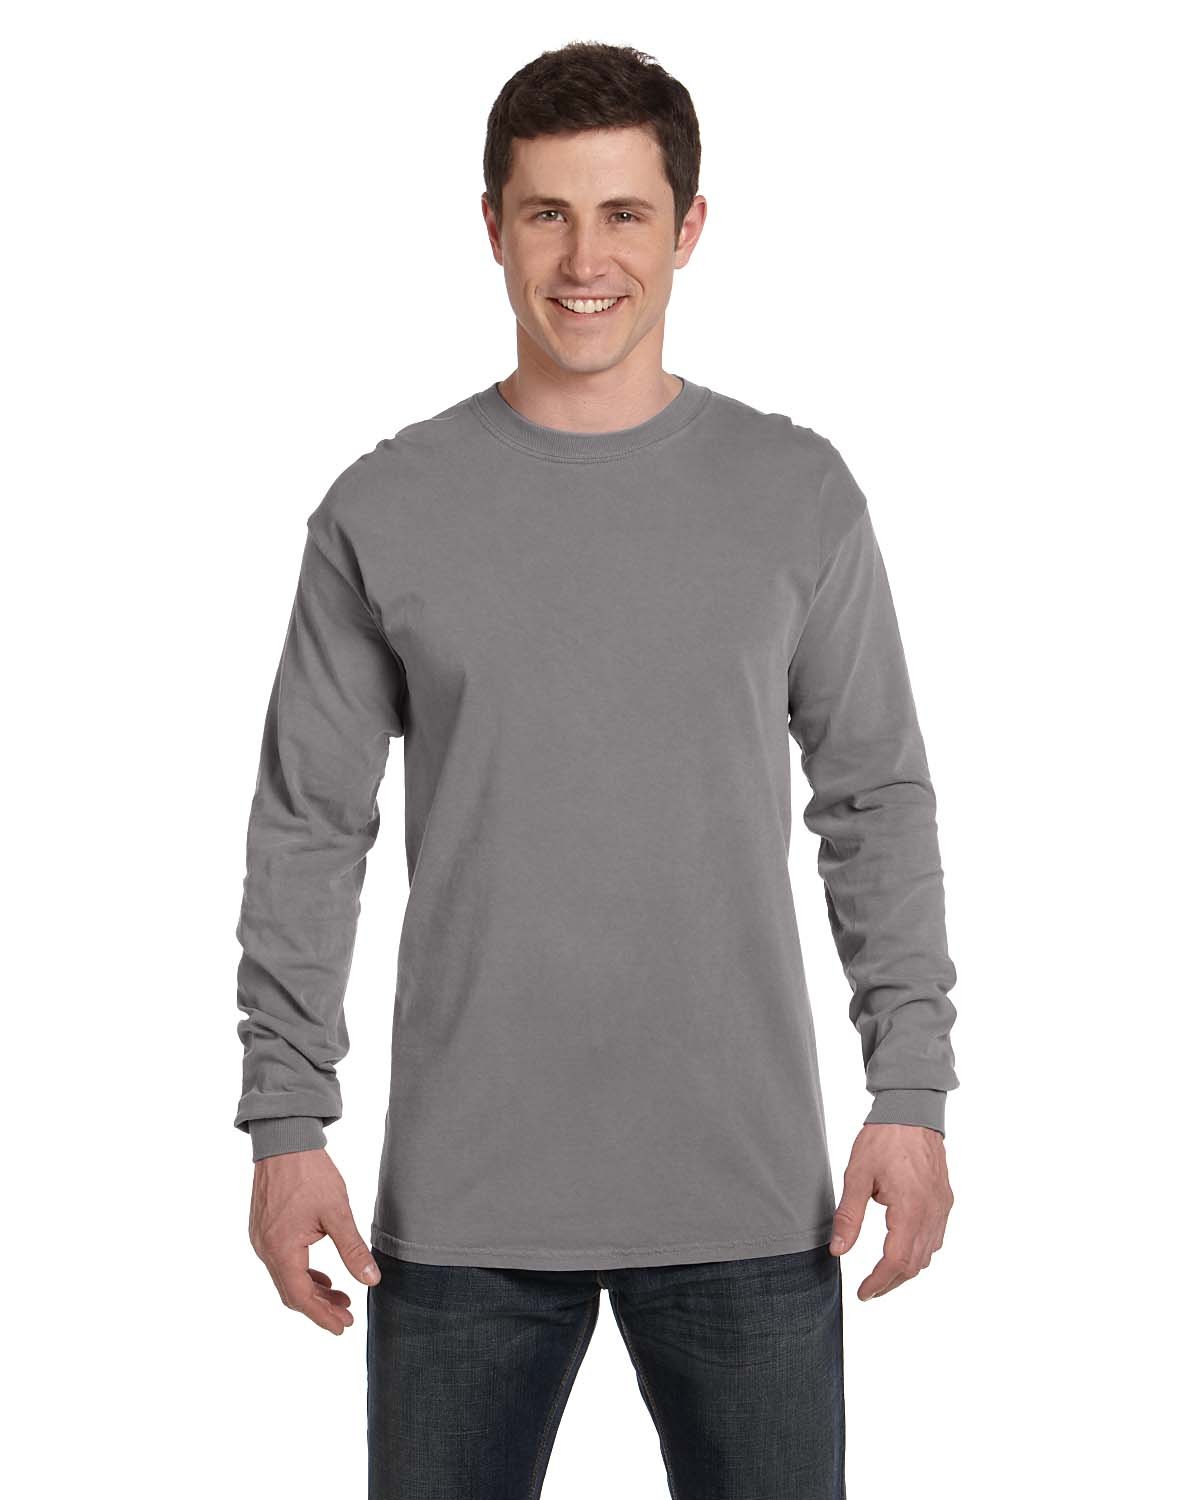 Trendy Cotton Blend Full Sleeve T-shirt For Men at Rs 444.00